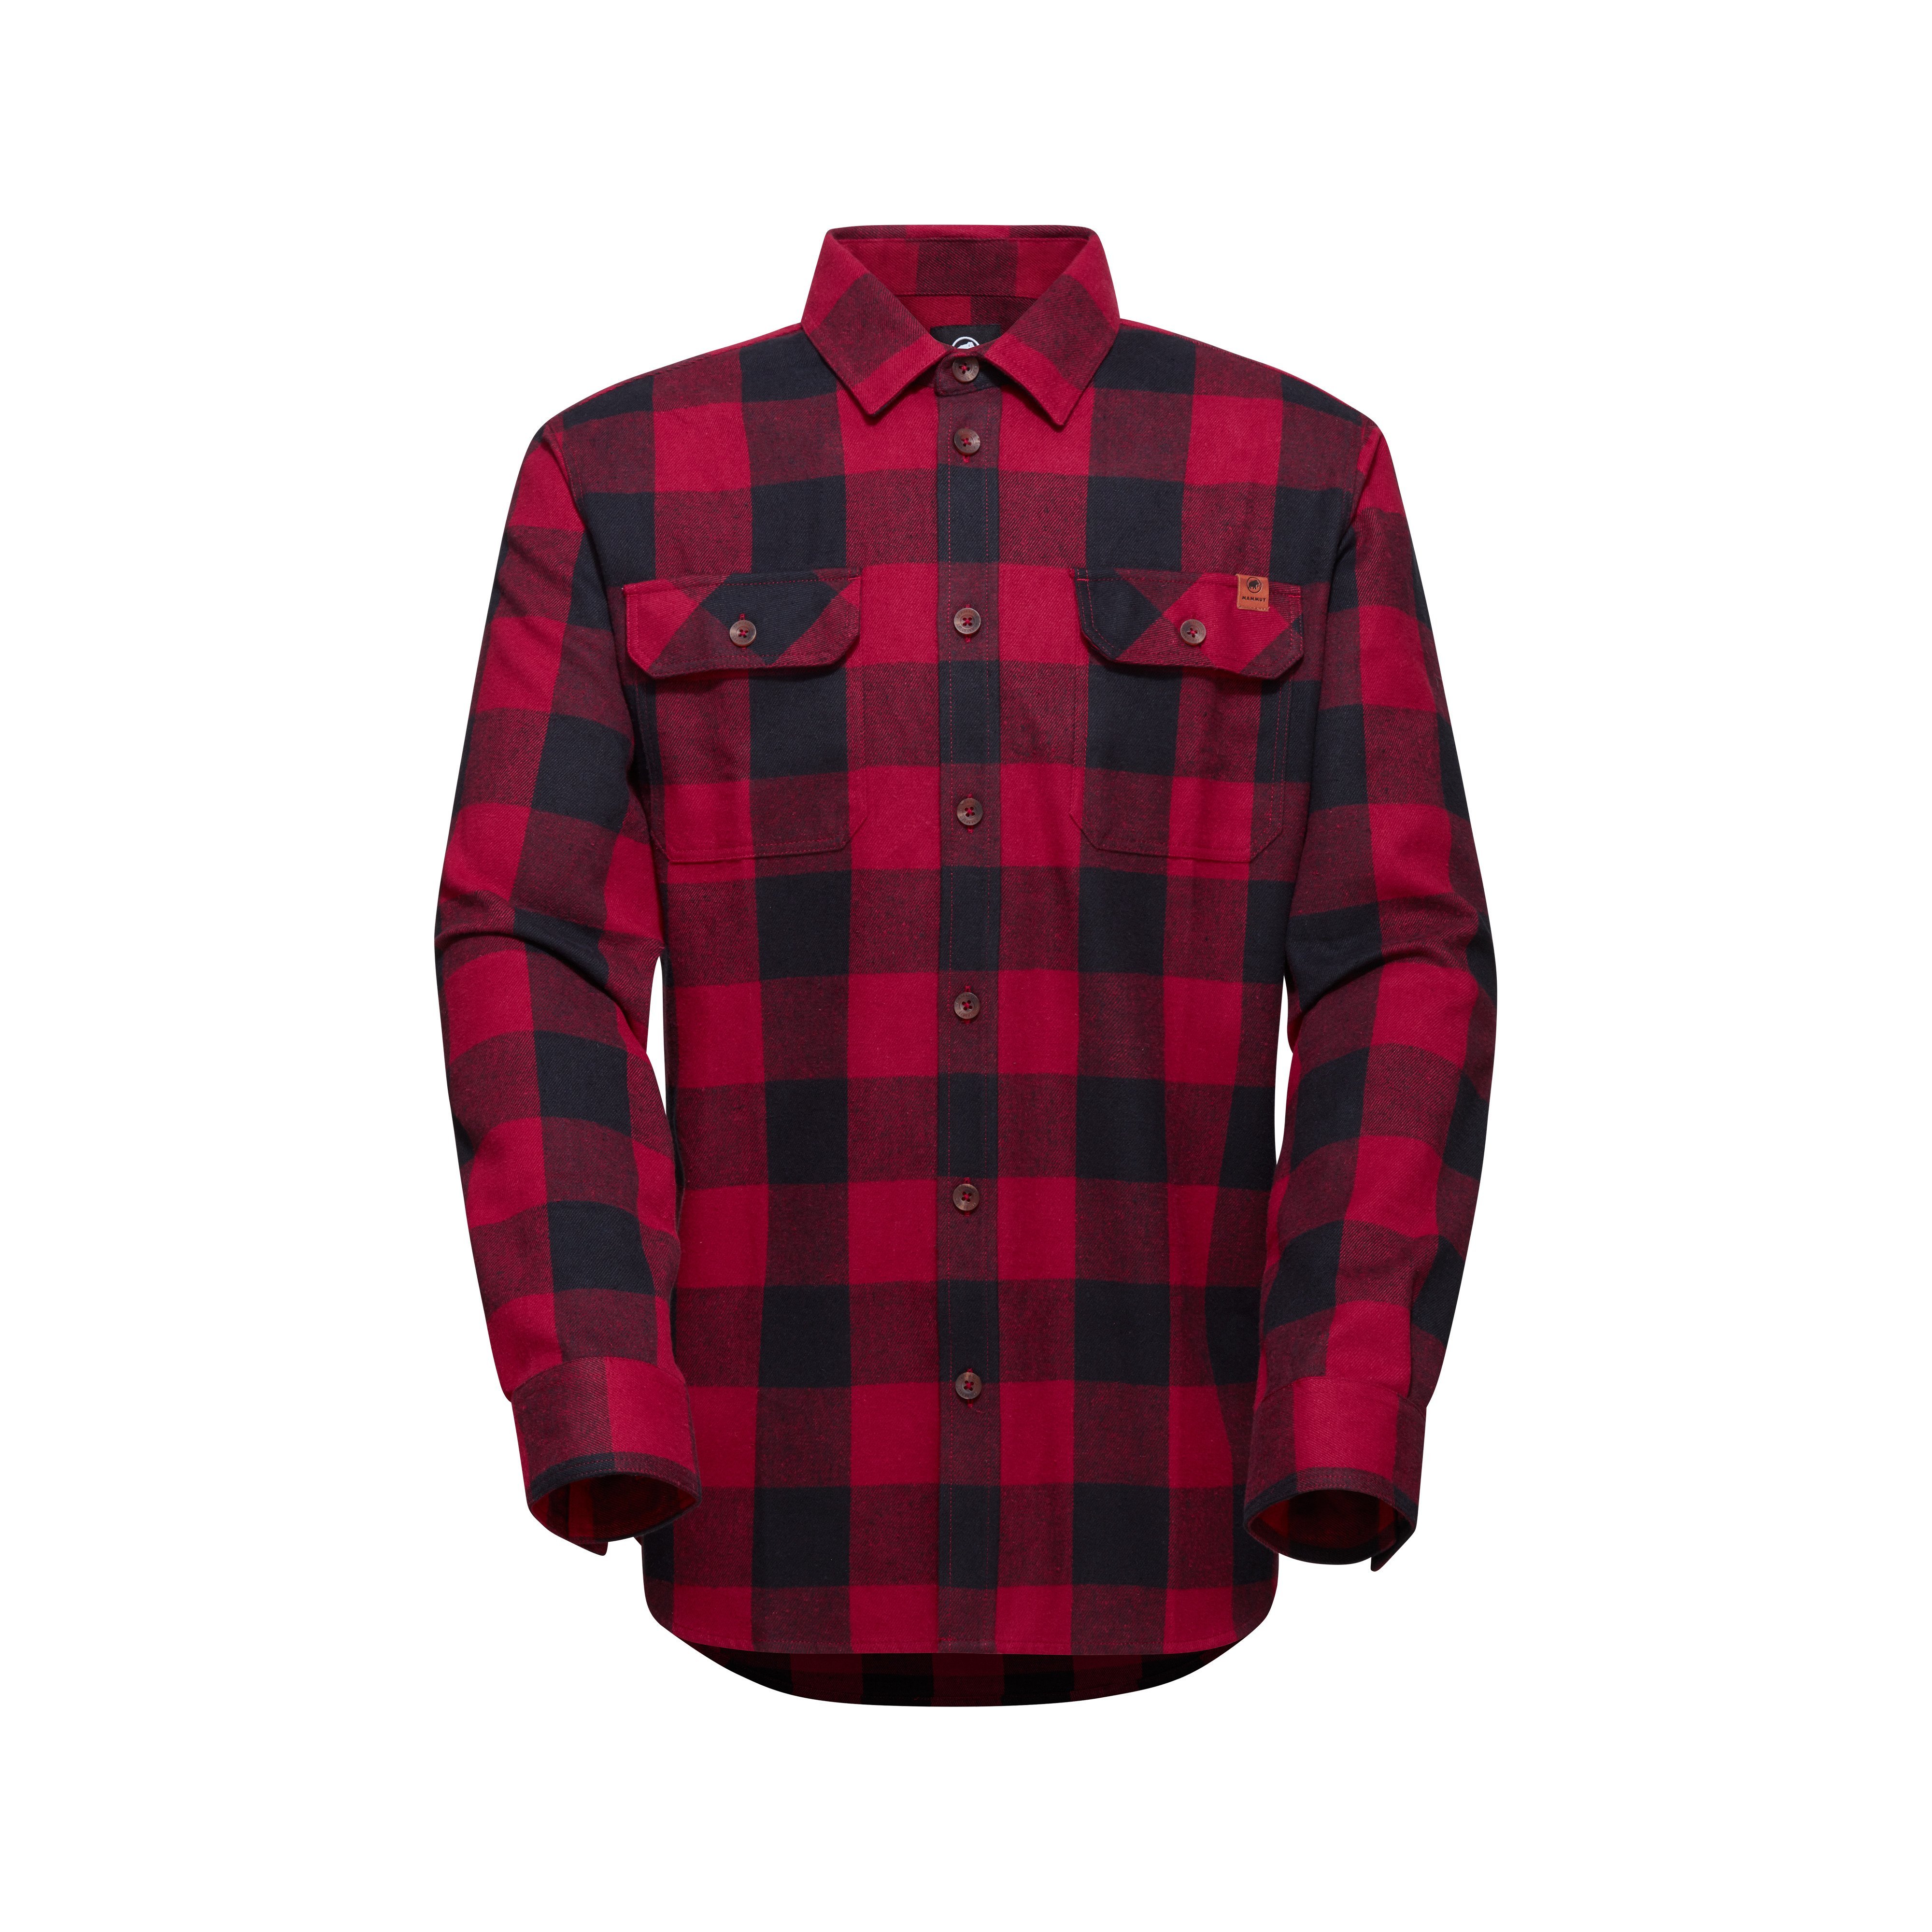 Tamaro Longsleeve Shirt Men - blood red-black, XXL product image